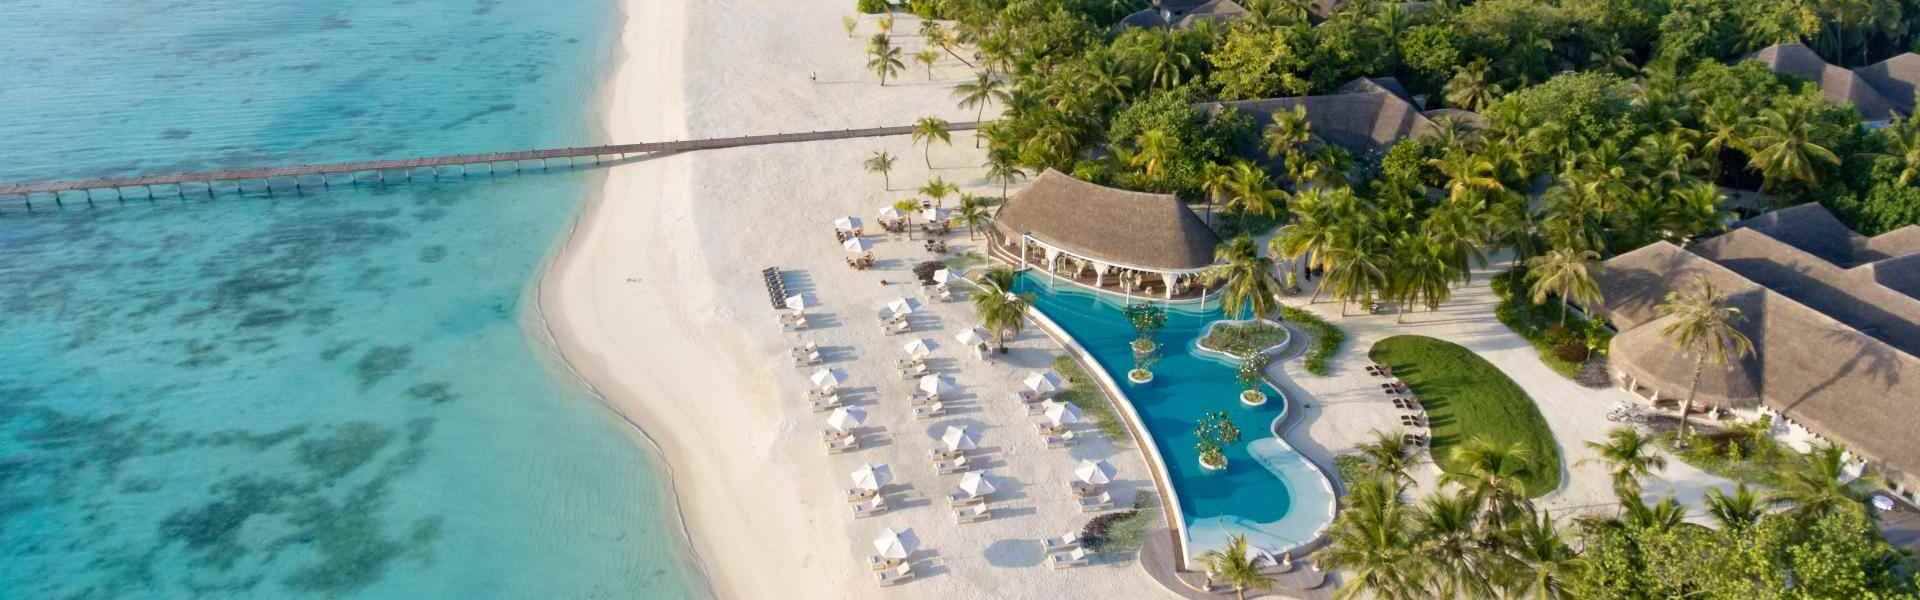 Dhigali Maldives - Luxury Holiday Destination